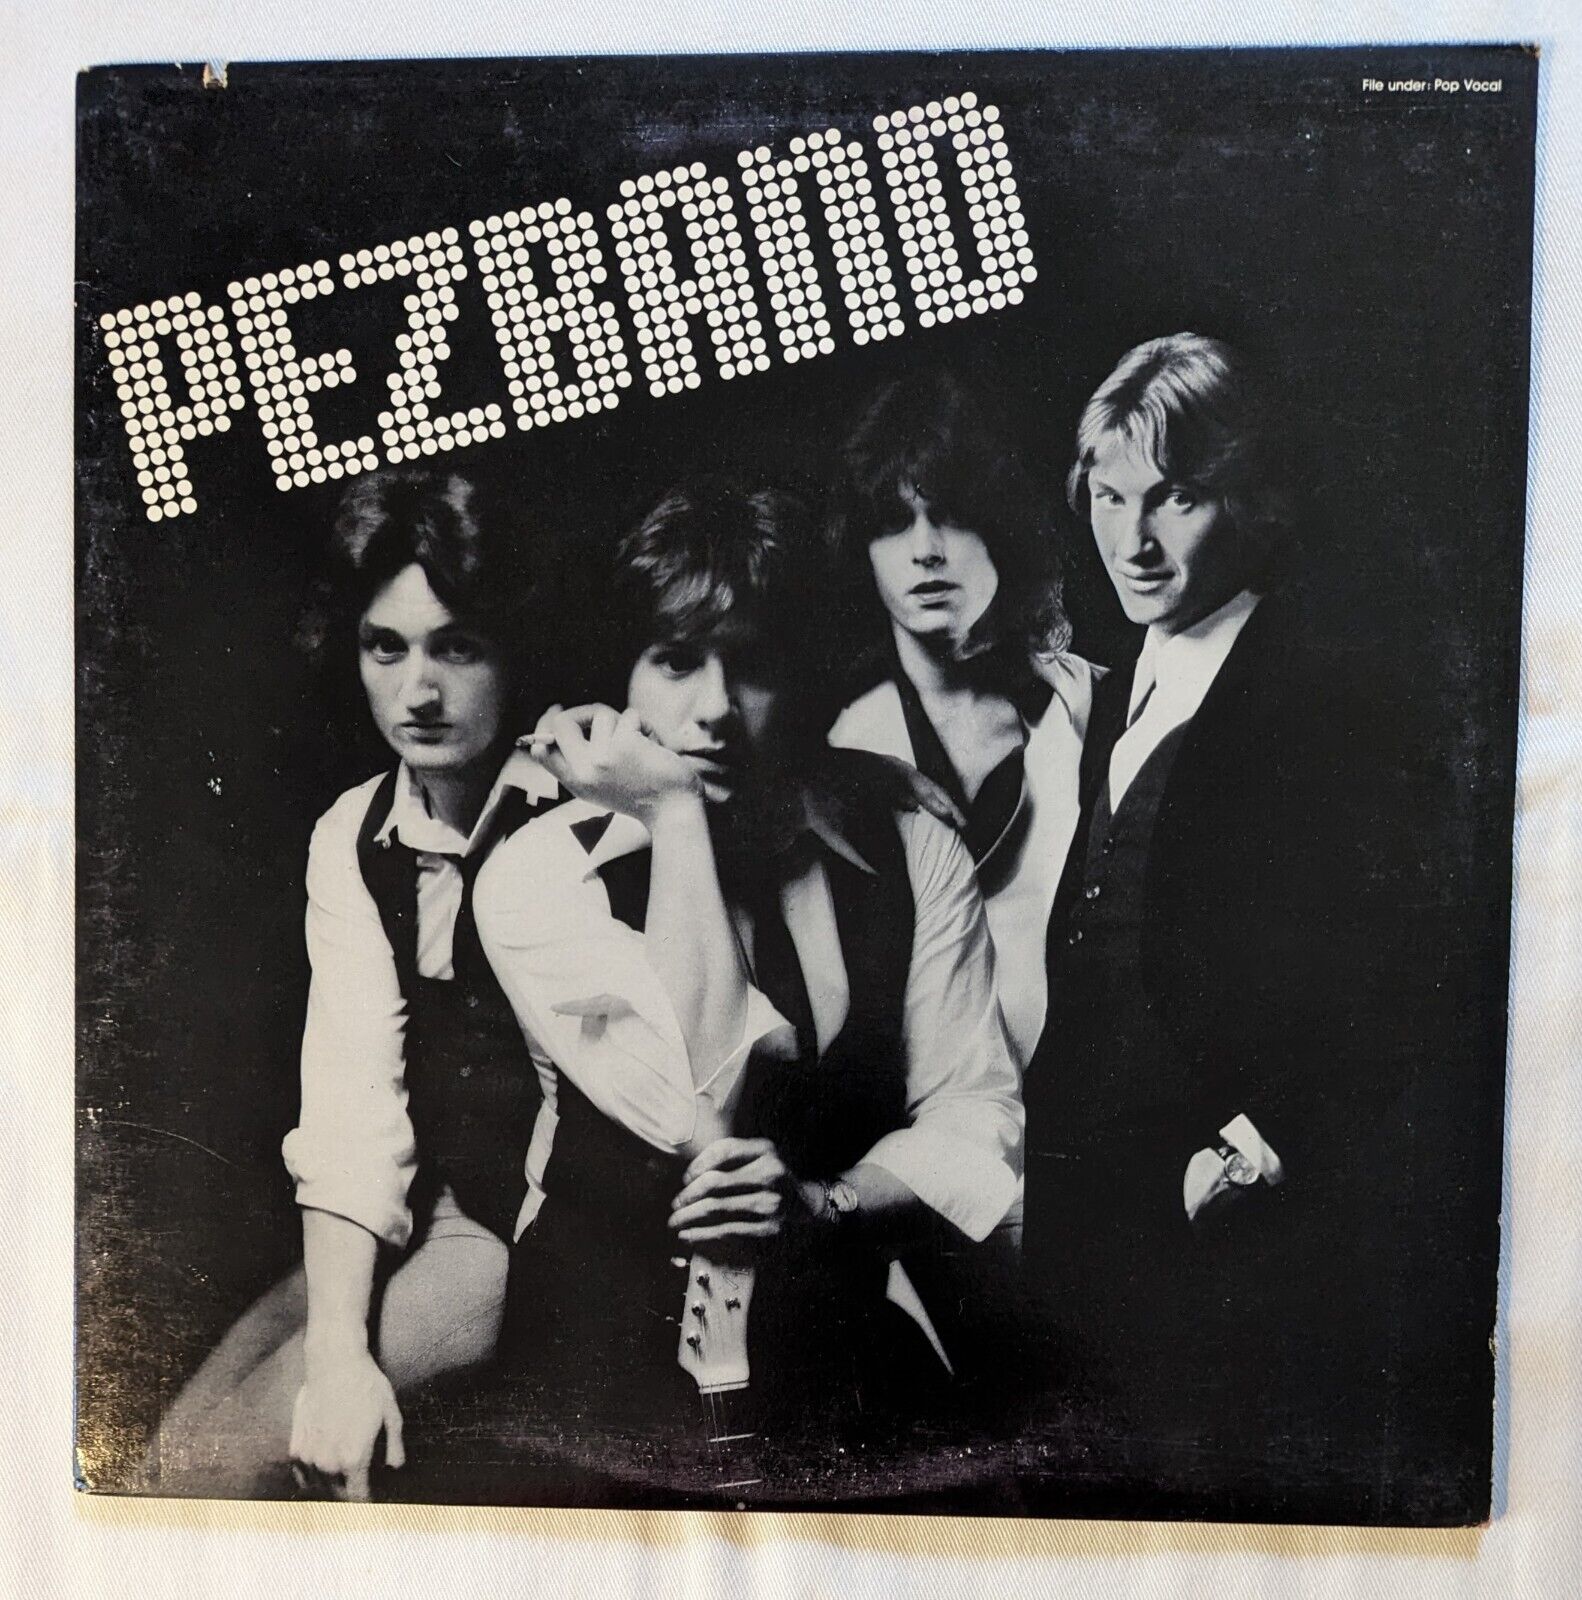 PEZBAND Self Titled LP 1977 Passport Records PP-98021 Pop Power Vinyl LP